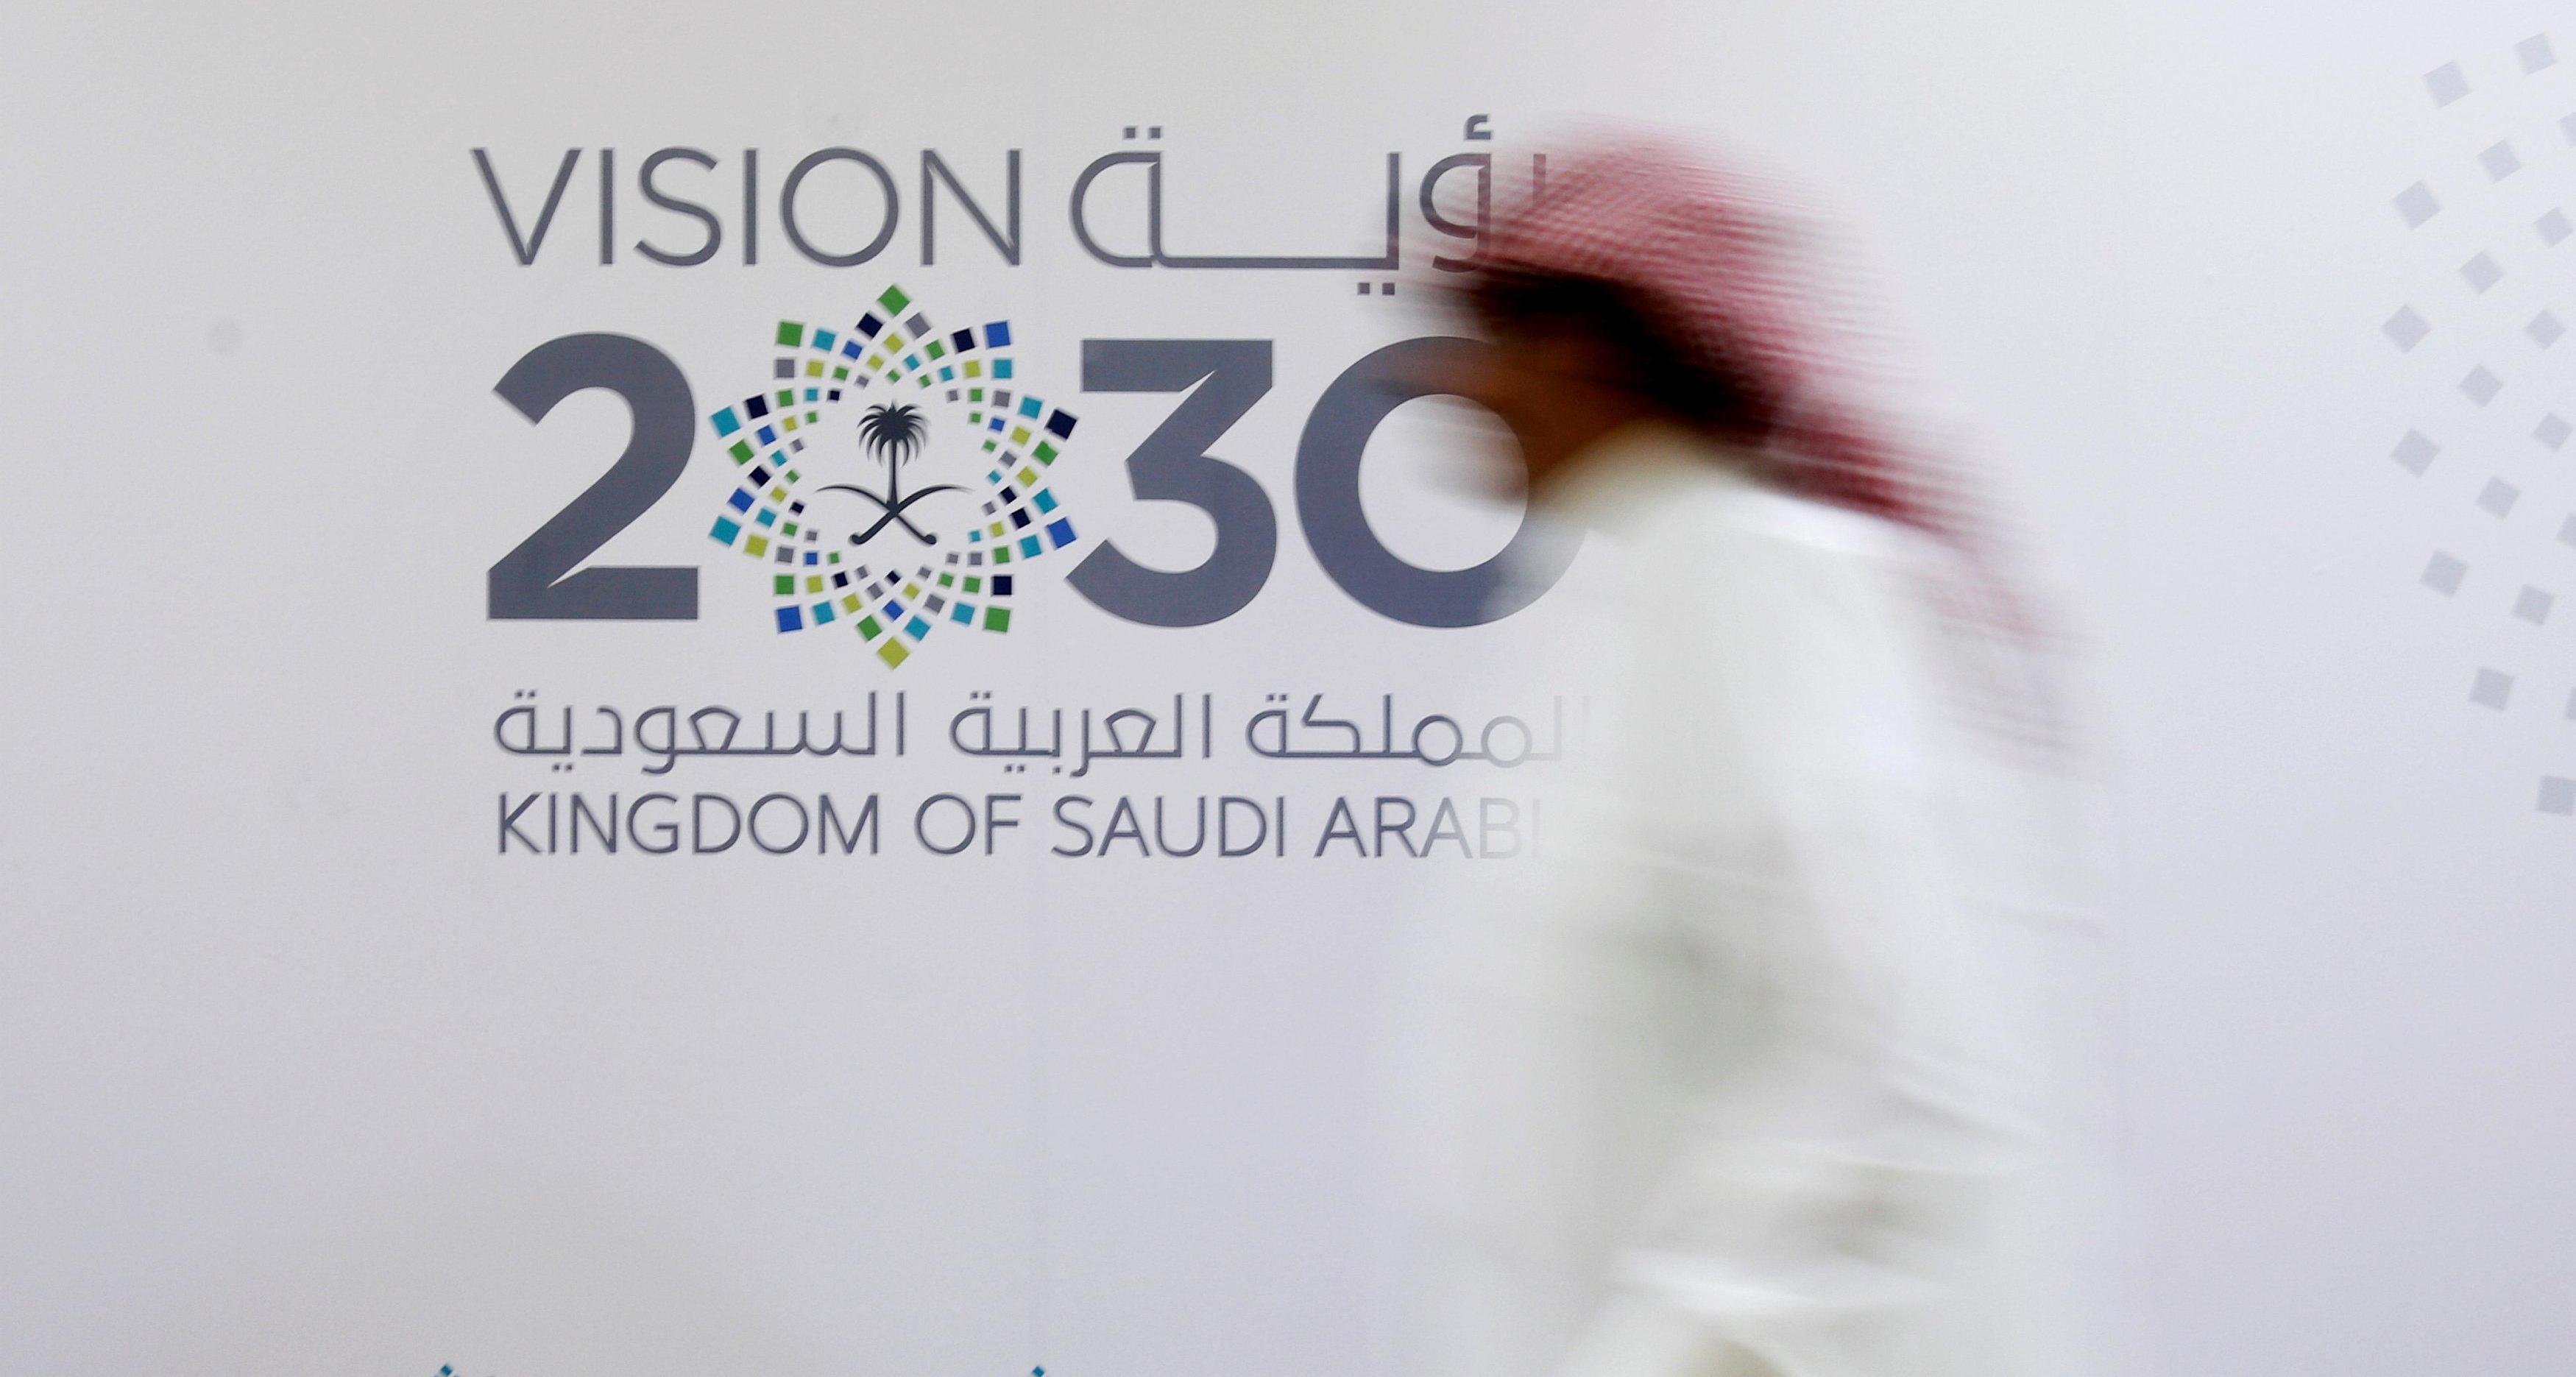 Investors lukewarm on Saudi reform plan, fear hit to economy